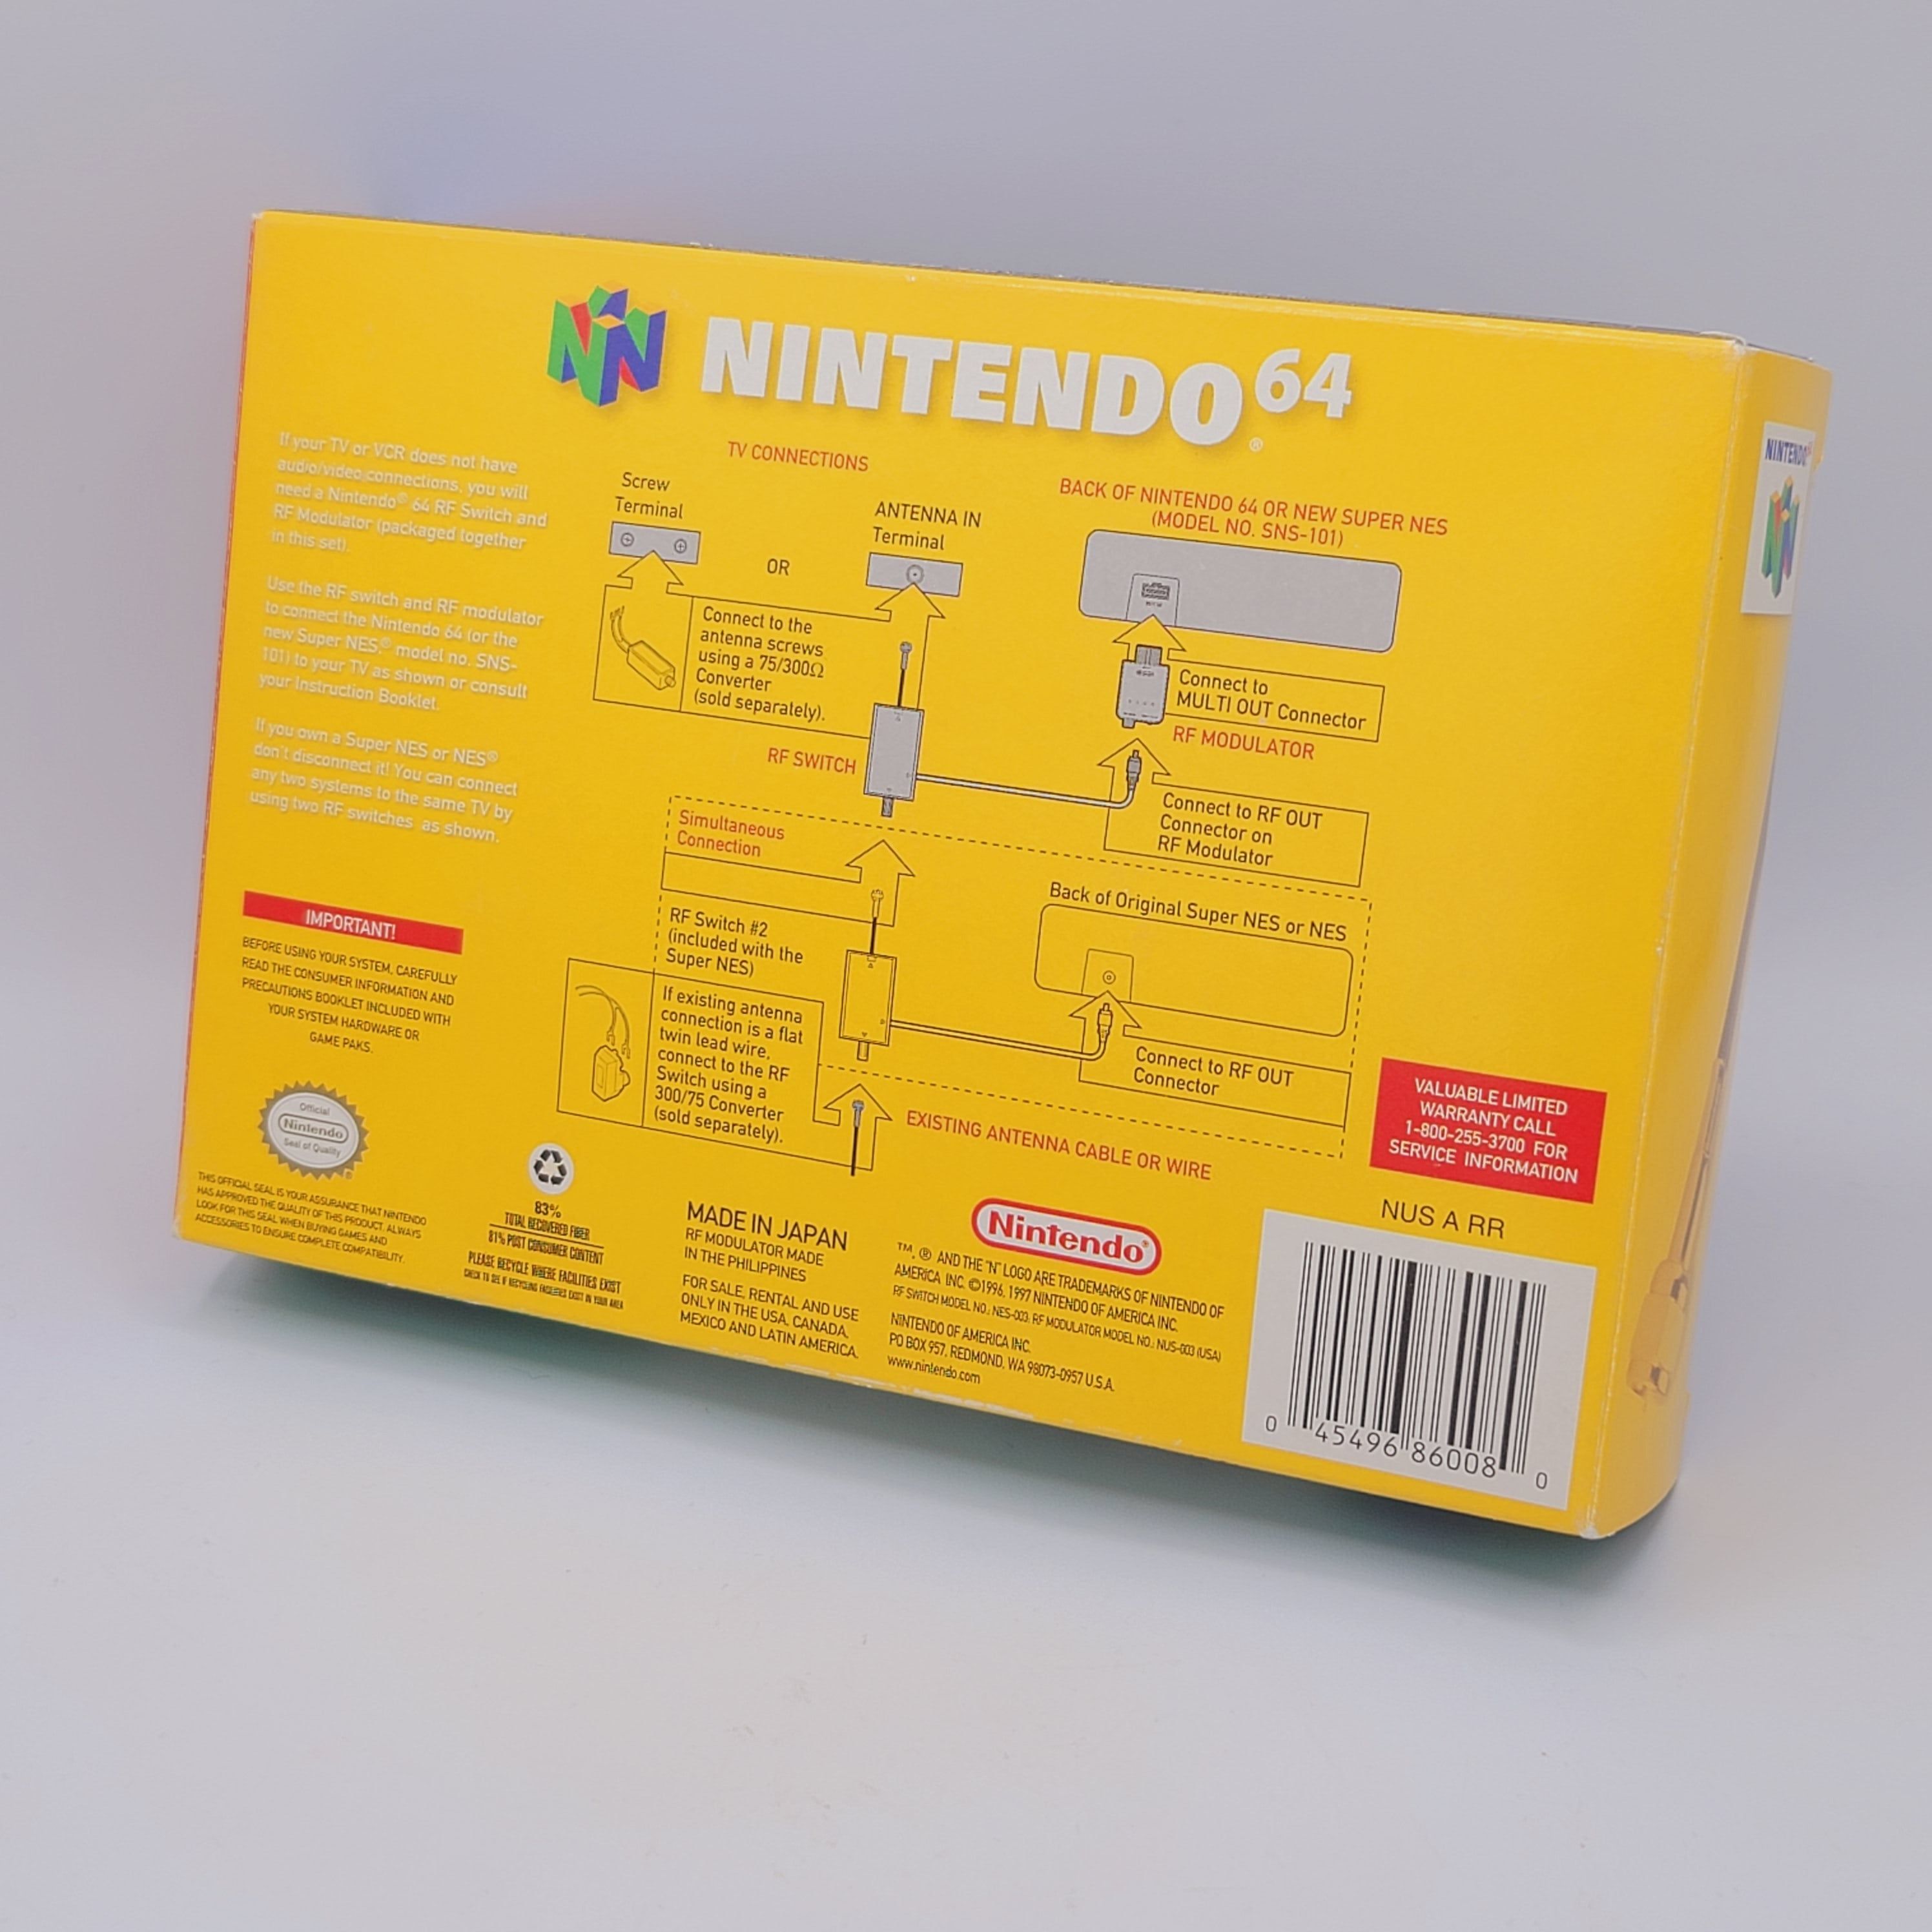 Nintendo 64 RF Switch / RF Modulator (Complete in Box / A / No Manual)